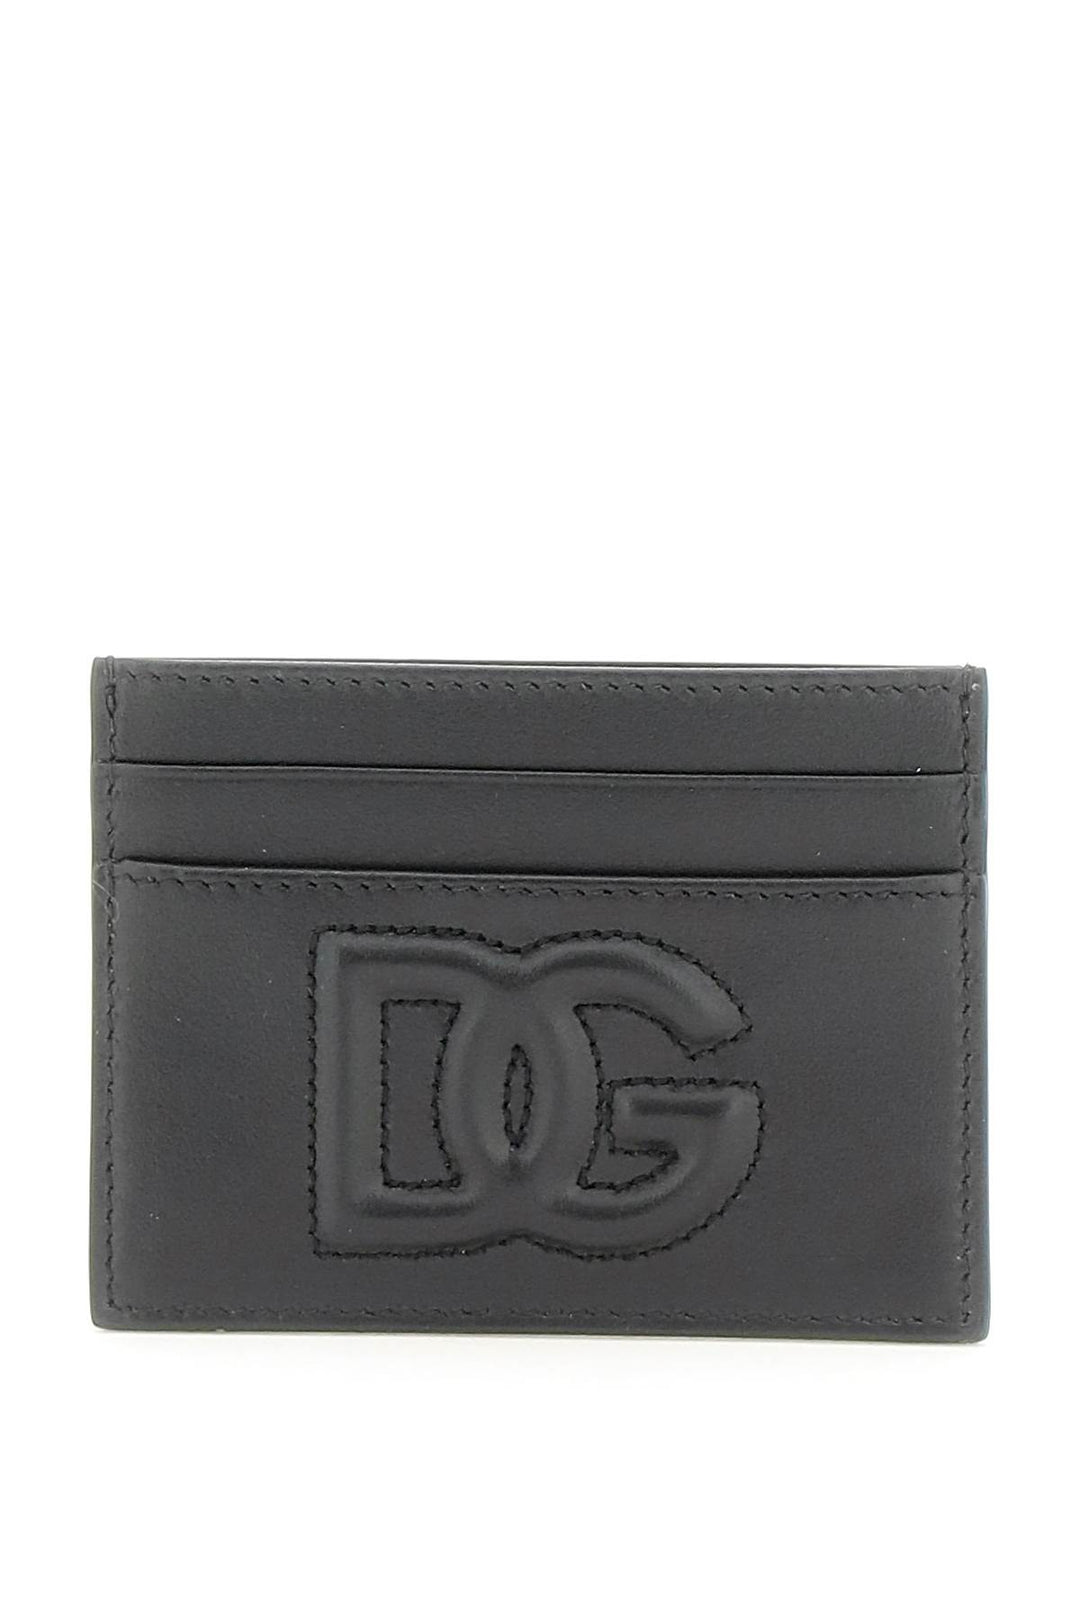 Dolce & Gabbana Logoed Cardholder   Nero